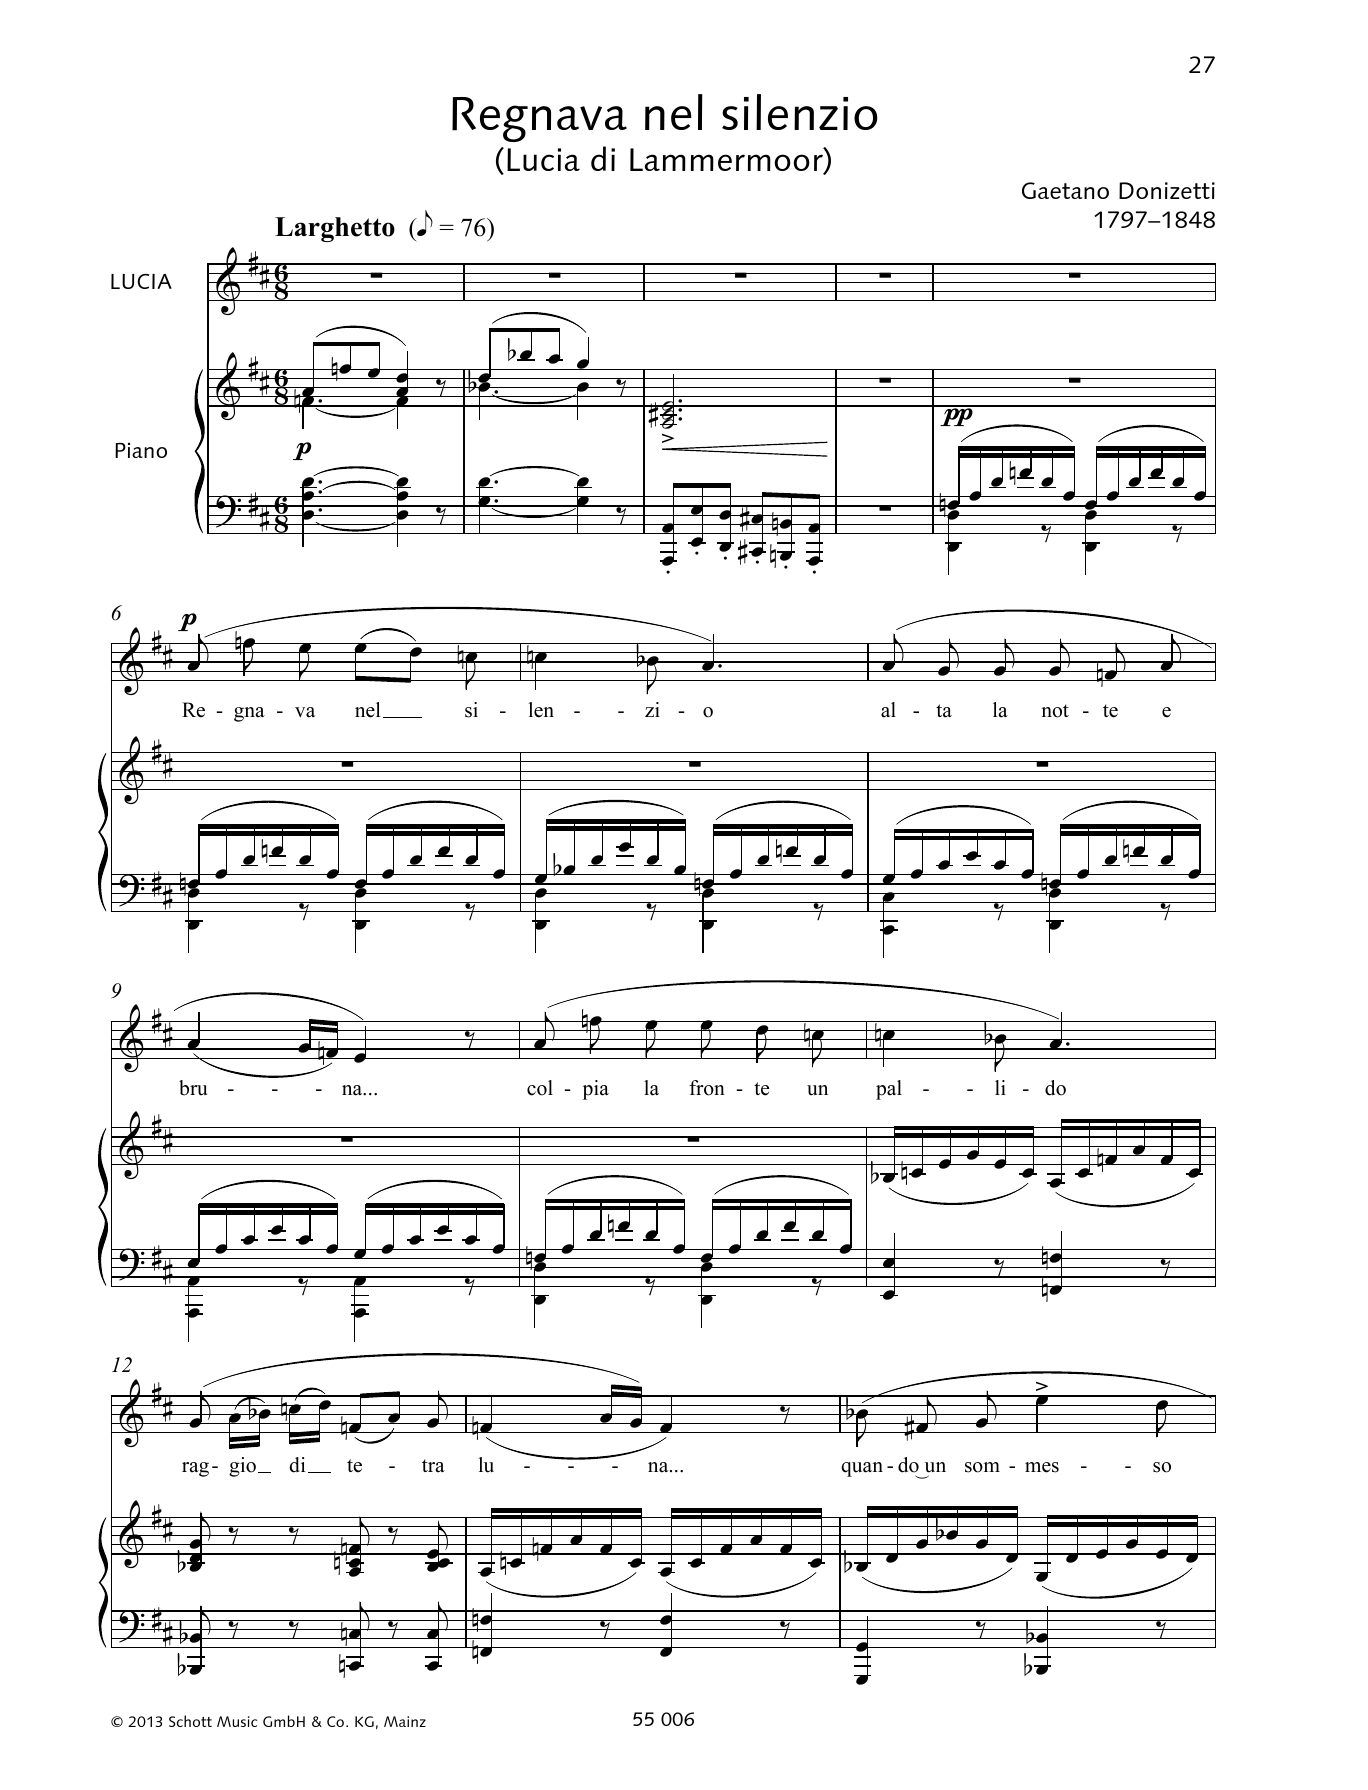 Download Gaetano Donizetti Regnava nel silenzio Sheet Music and learn how to play Piano & Vocal PDF digital score in minutes